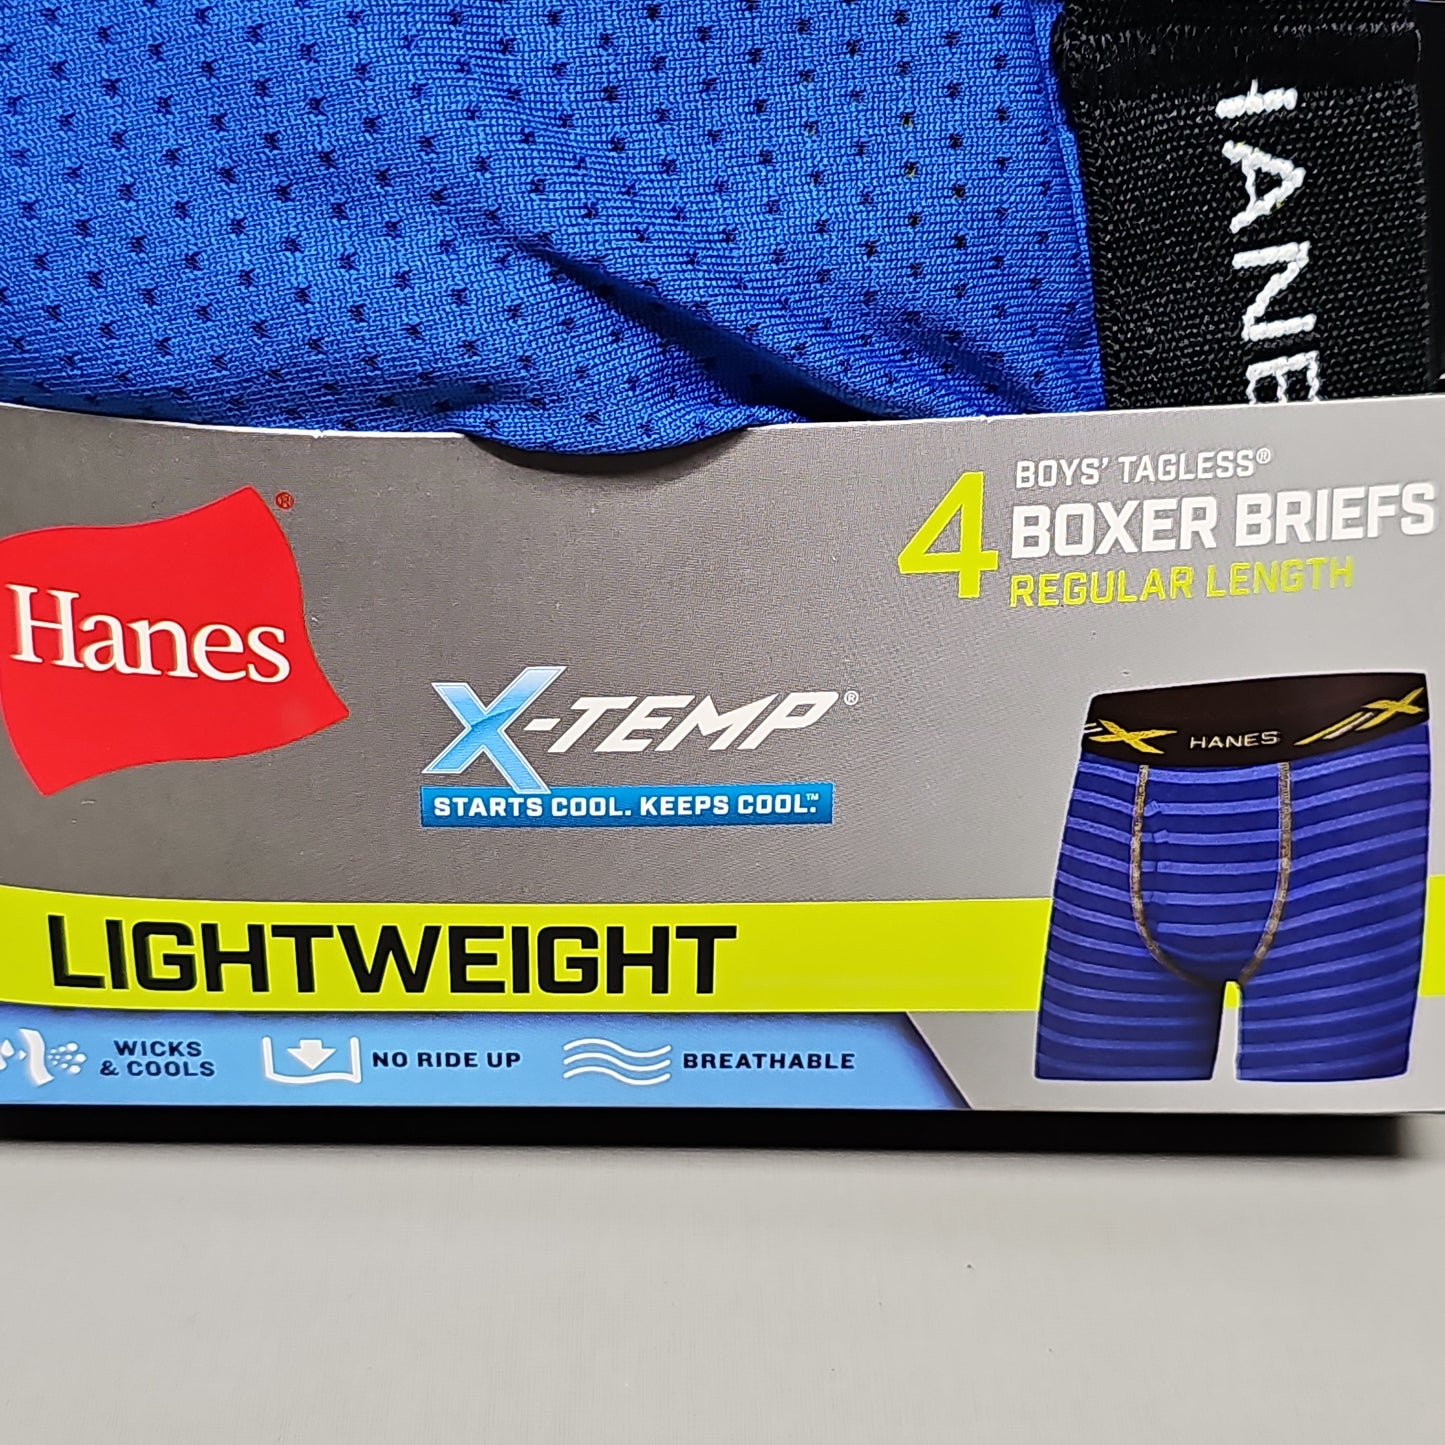 HANES Boxer Briefs 16-Pack Tagless X-Temp Boy's Size M (10/12) BXFMX4 (New)